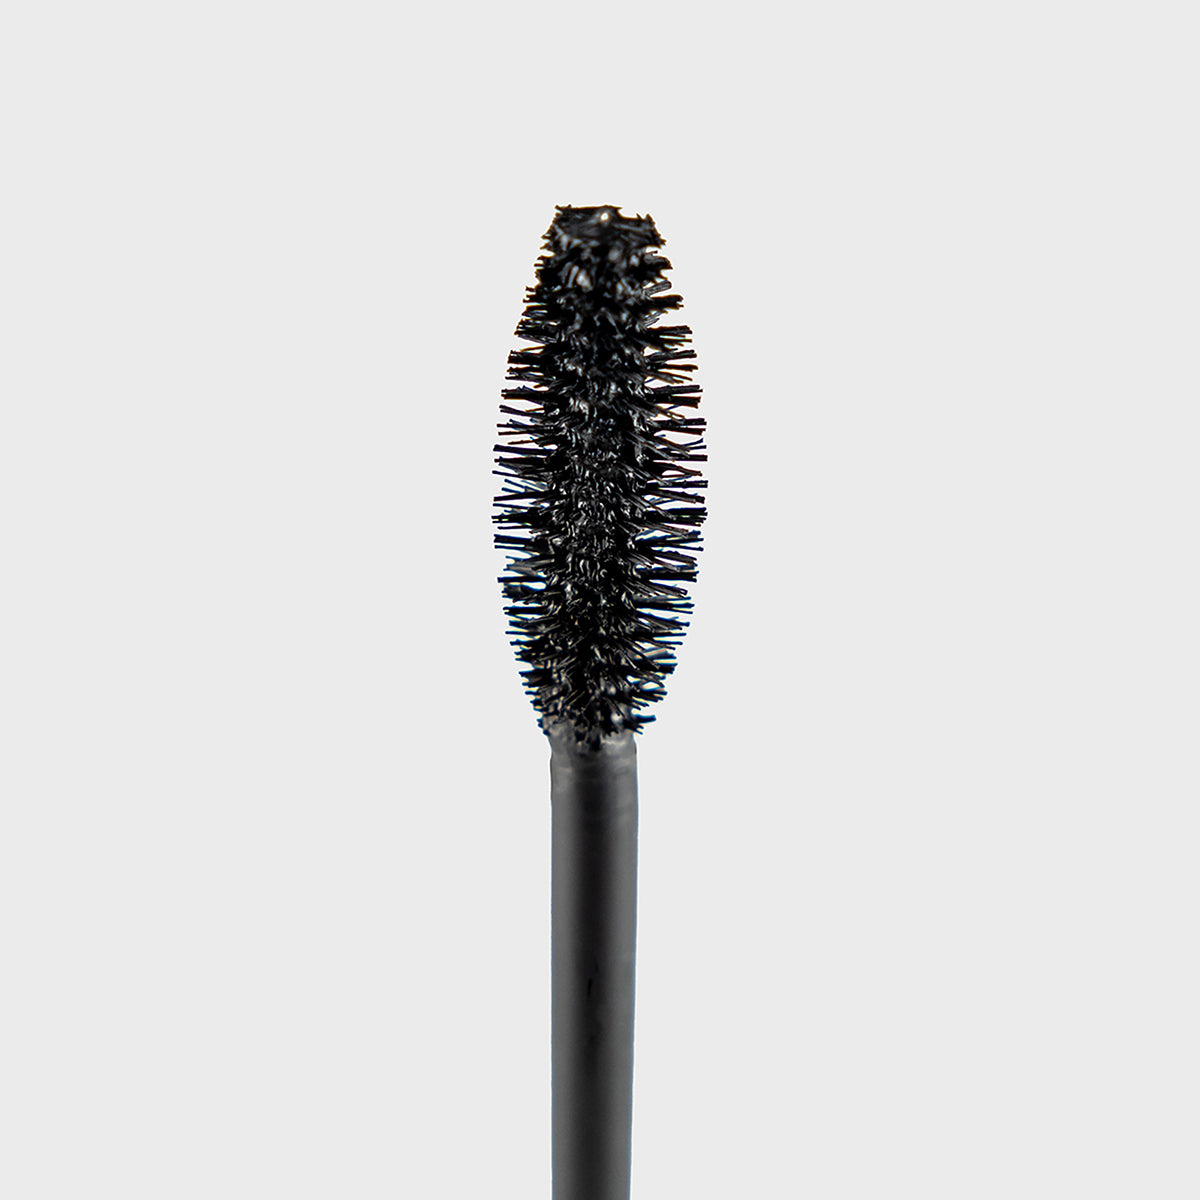 Close up of bristles on mascara wand